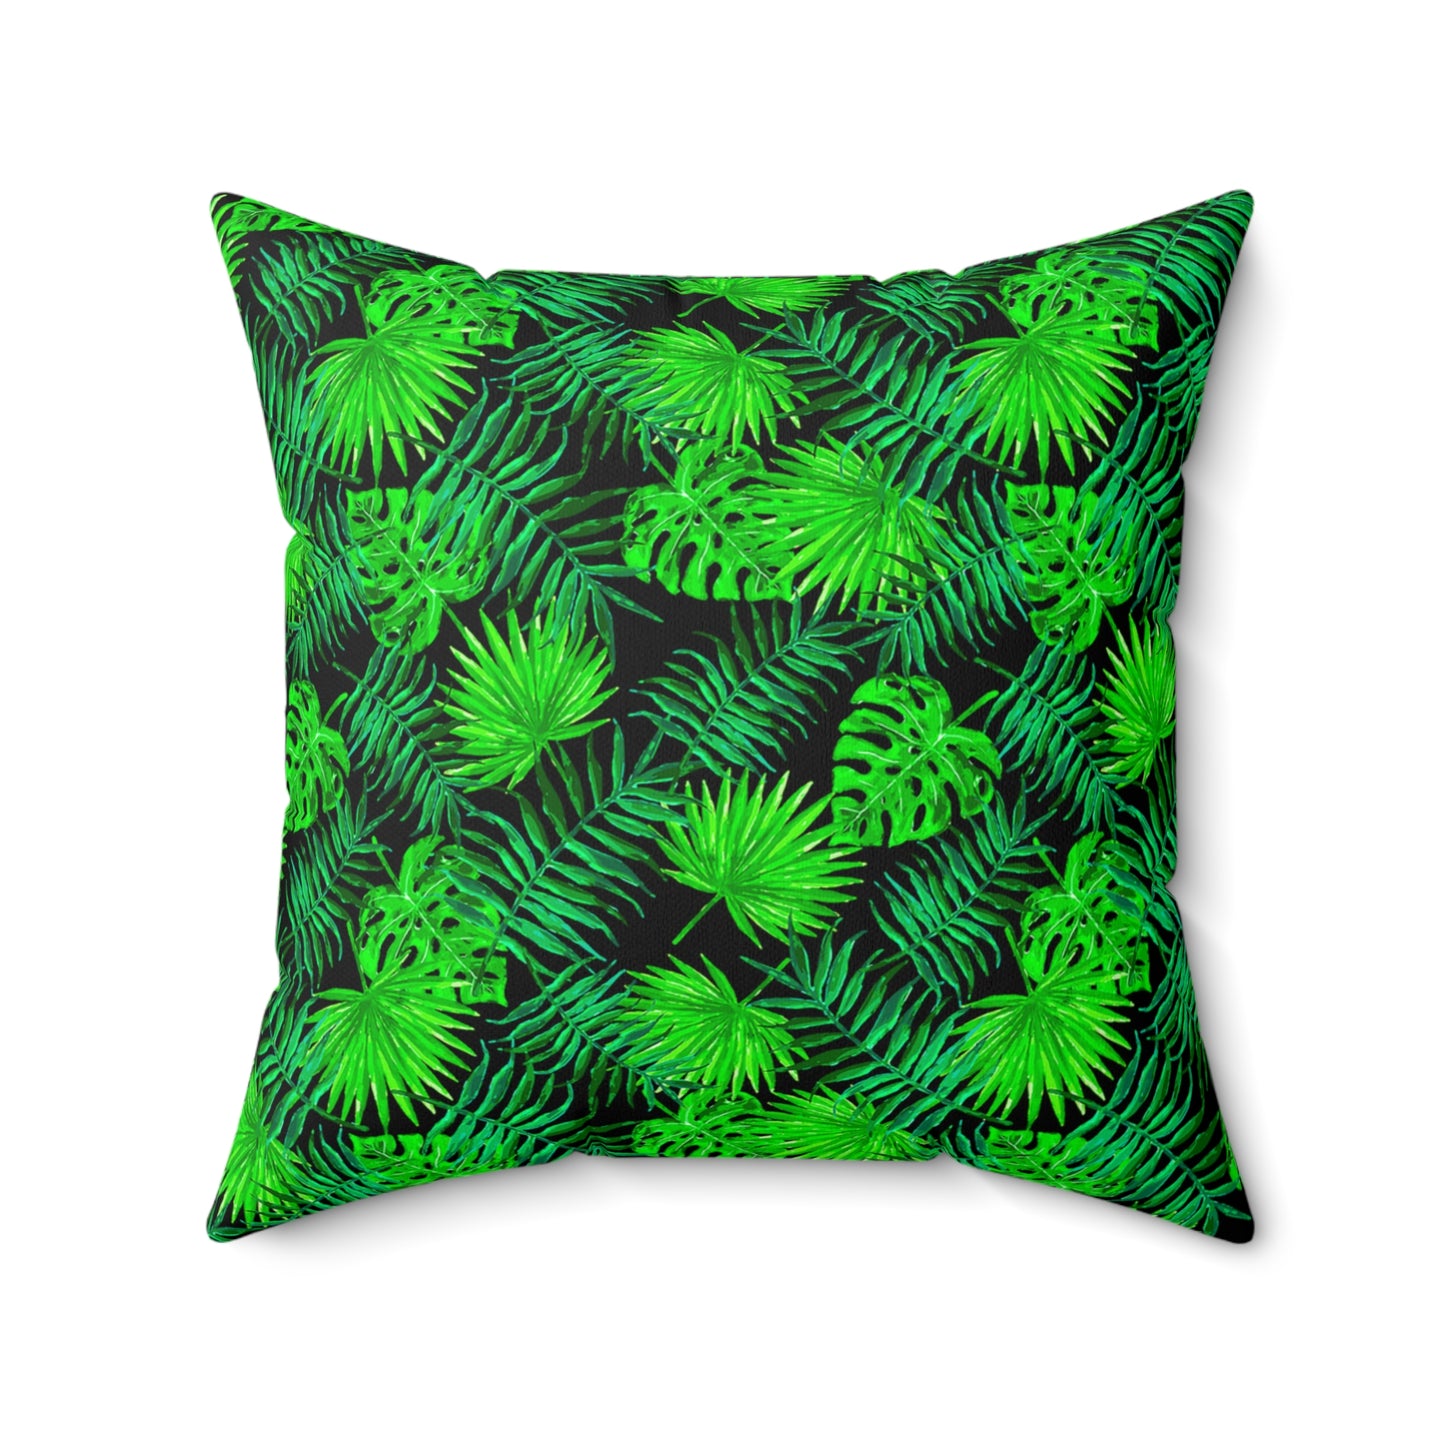 Snooty Fox Art Premium Square Pillow - Palm Green Leaves